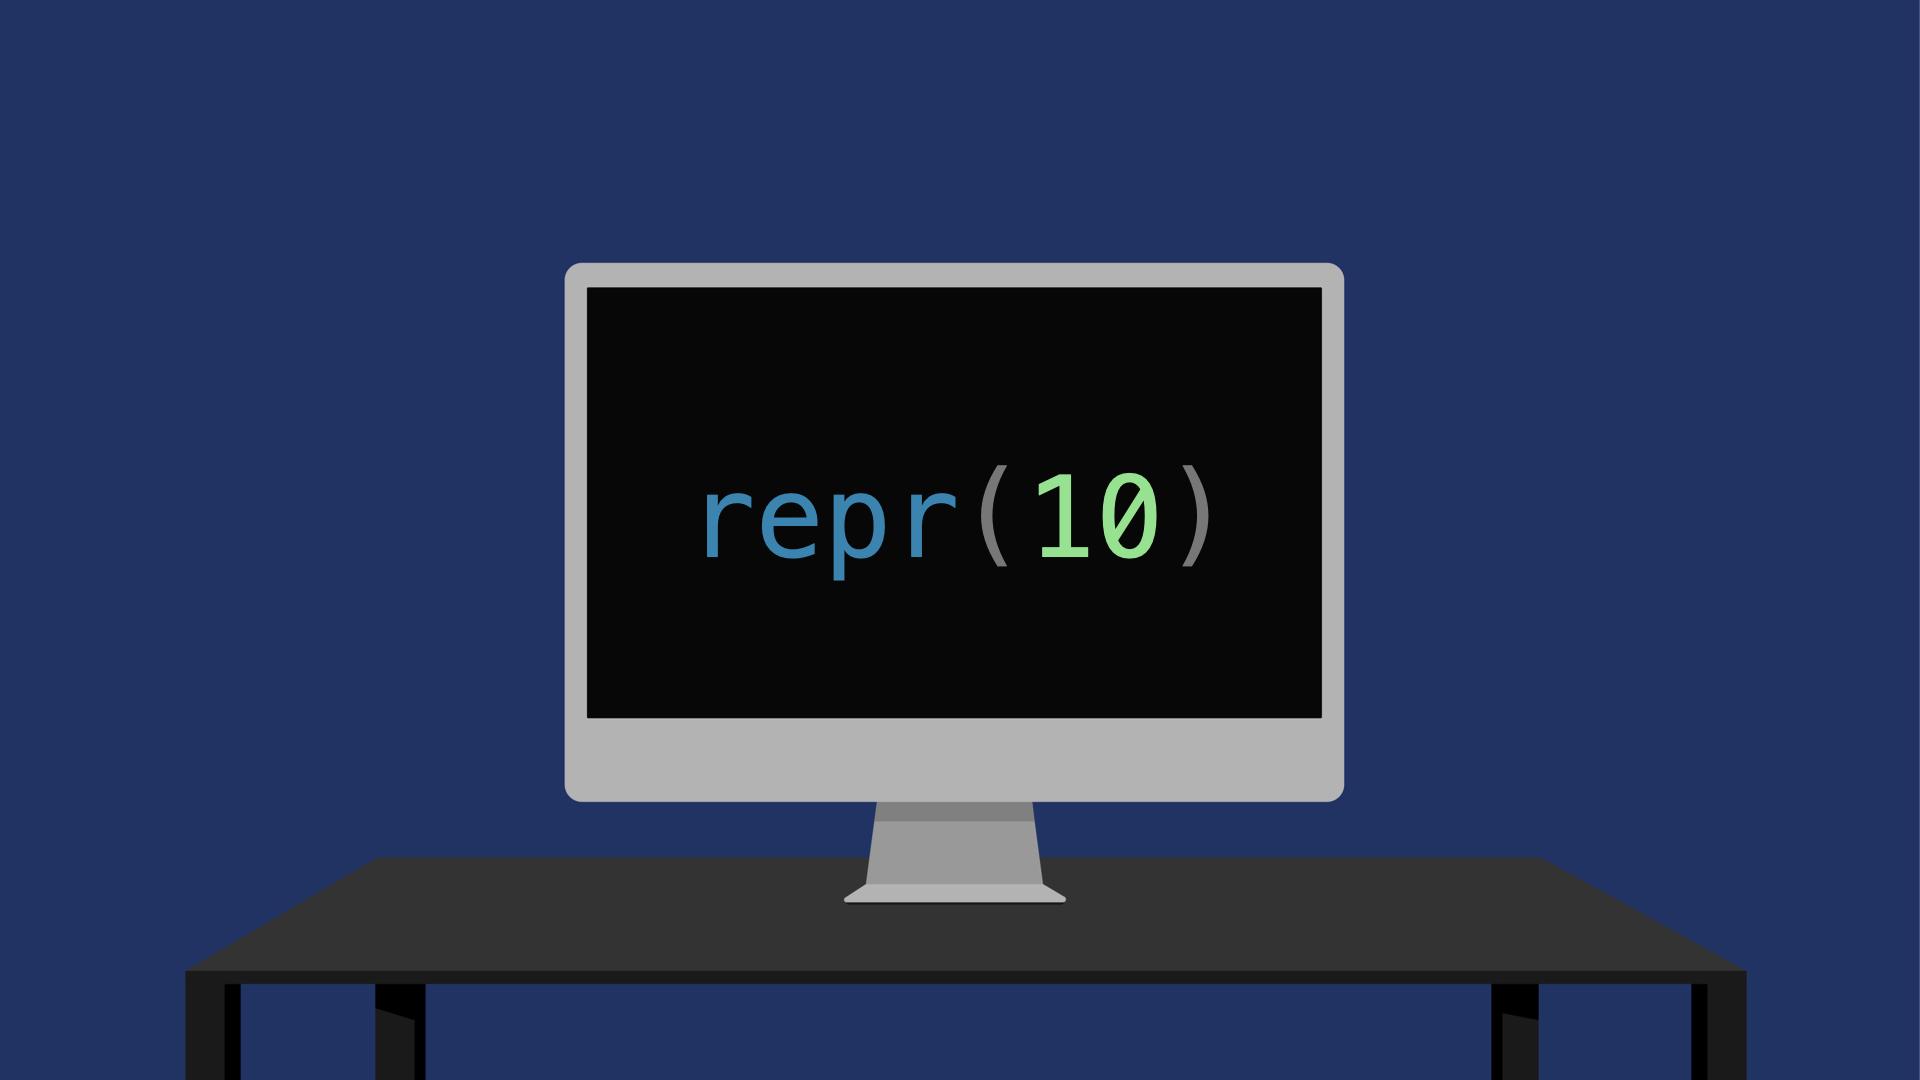 __repr__ in Python